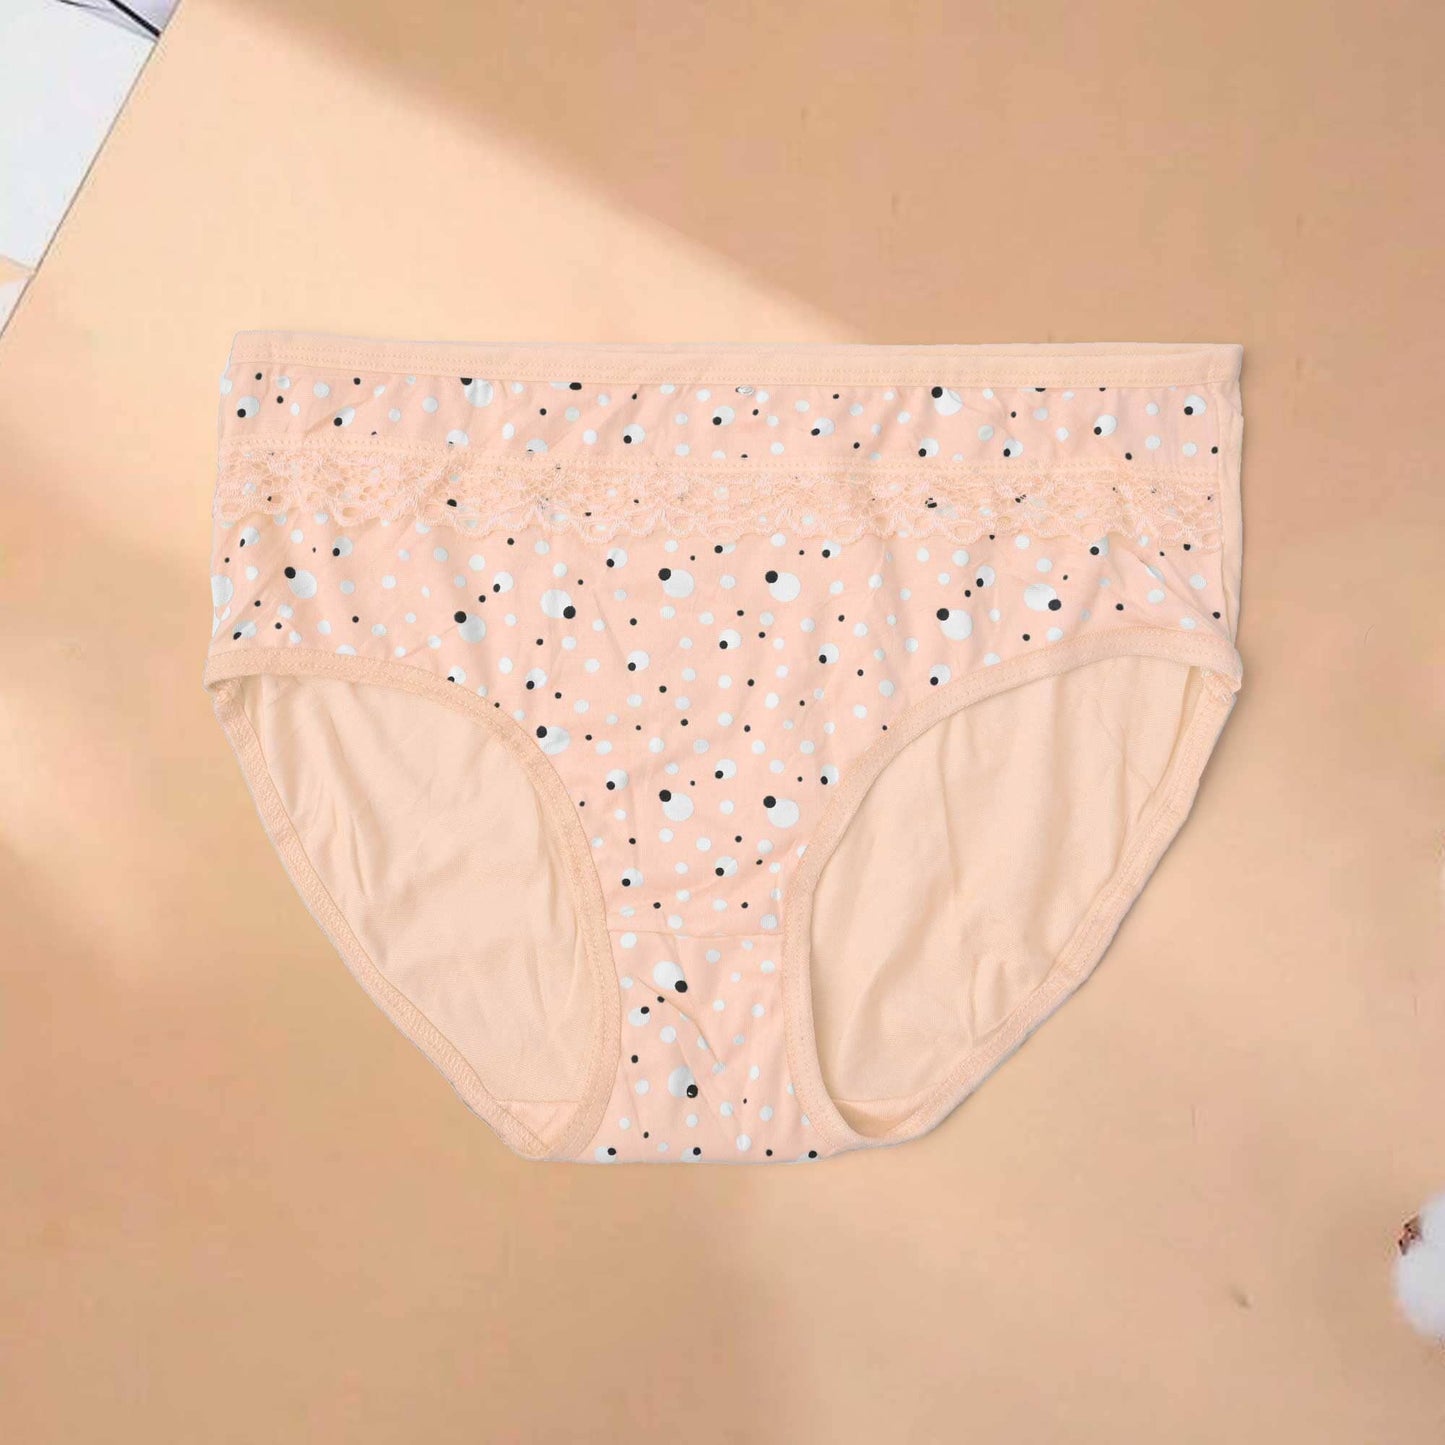 Yinidanya Women's Lace Design Polka Dots Printed Underwear Women's Lingerie RAM Peach 28-34 